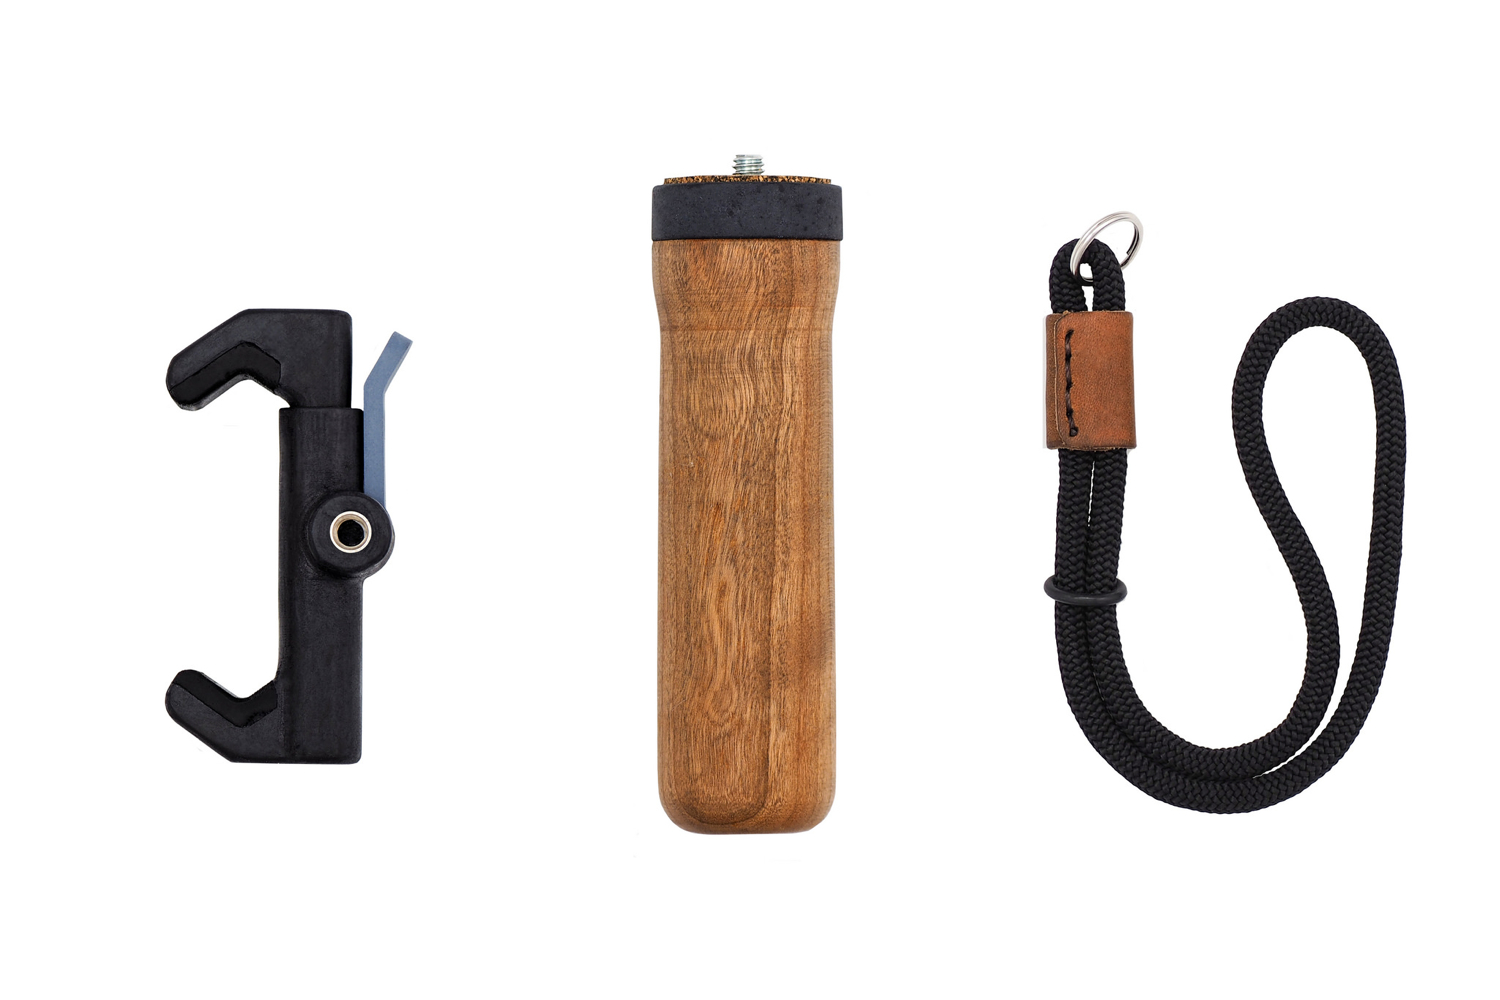 studio neat glif kickstarter tripod mount smartphones new quick release 5